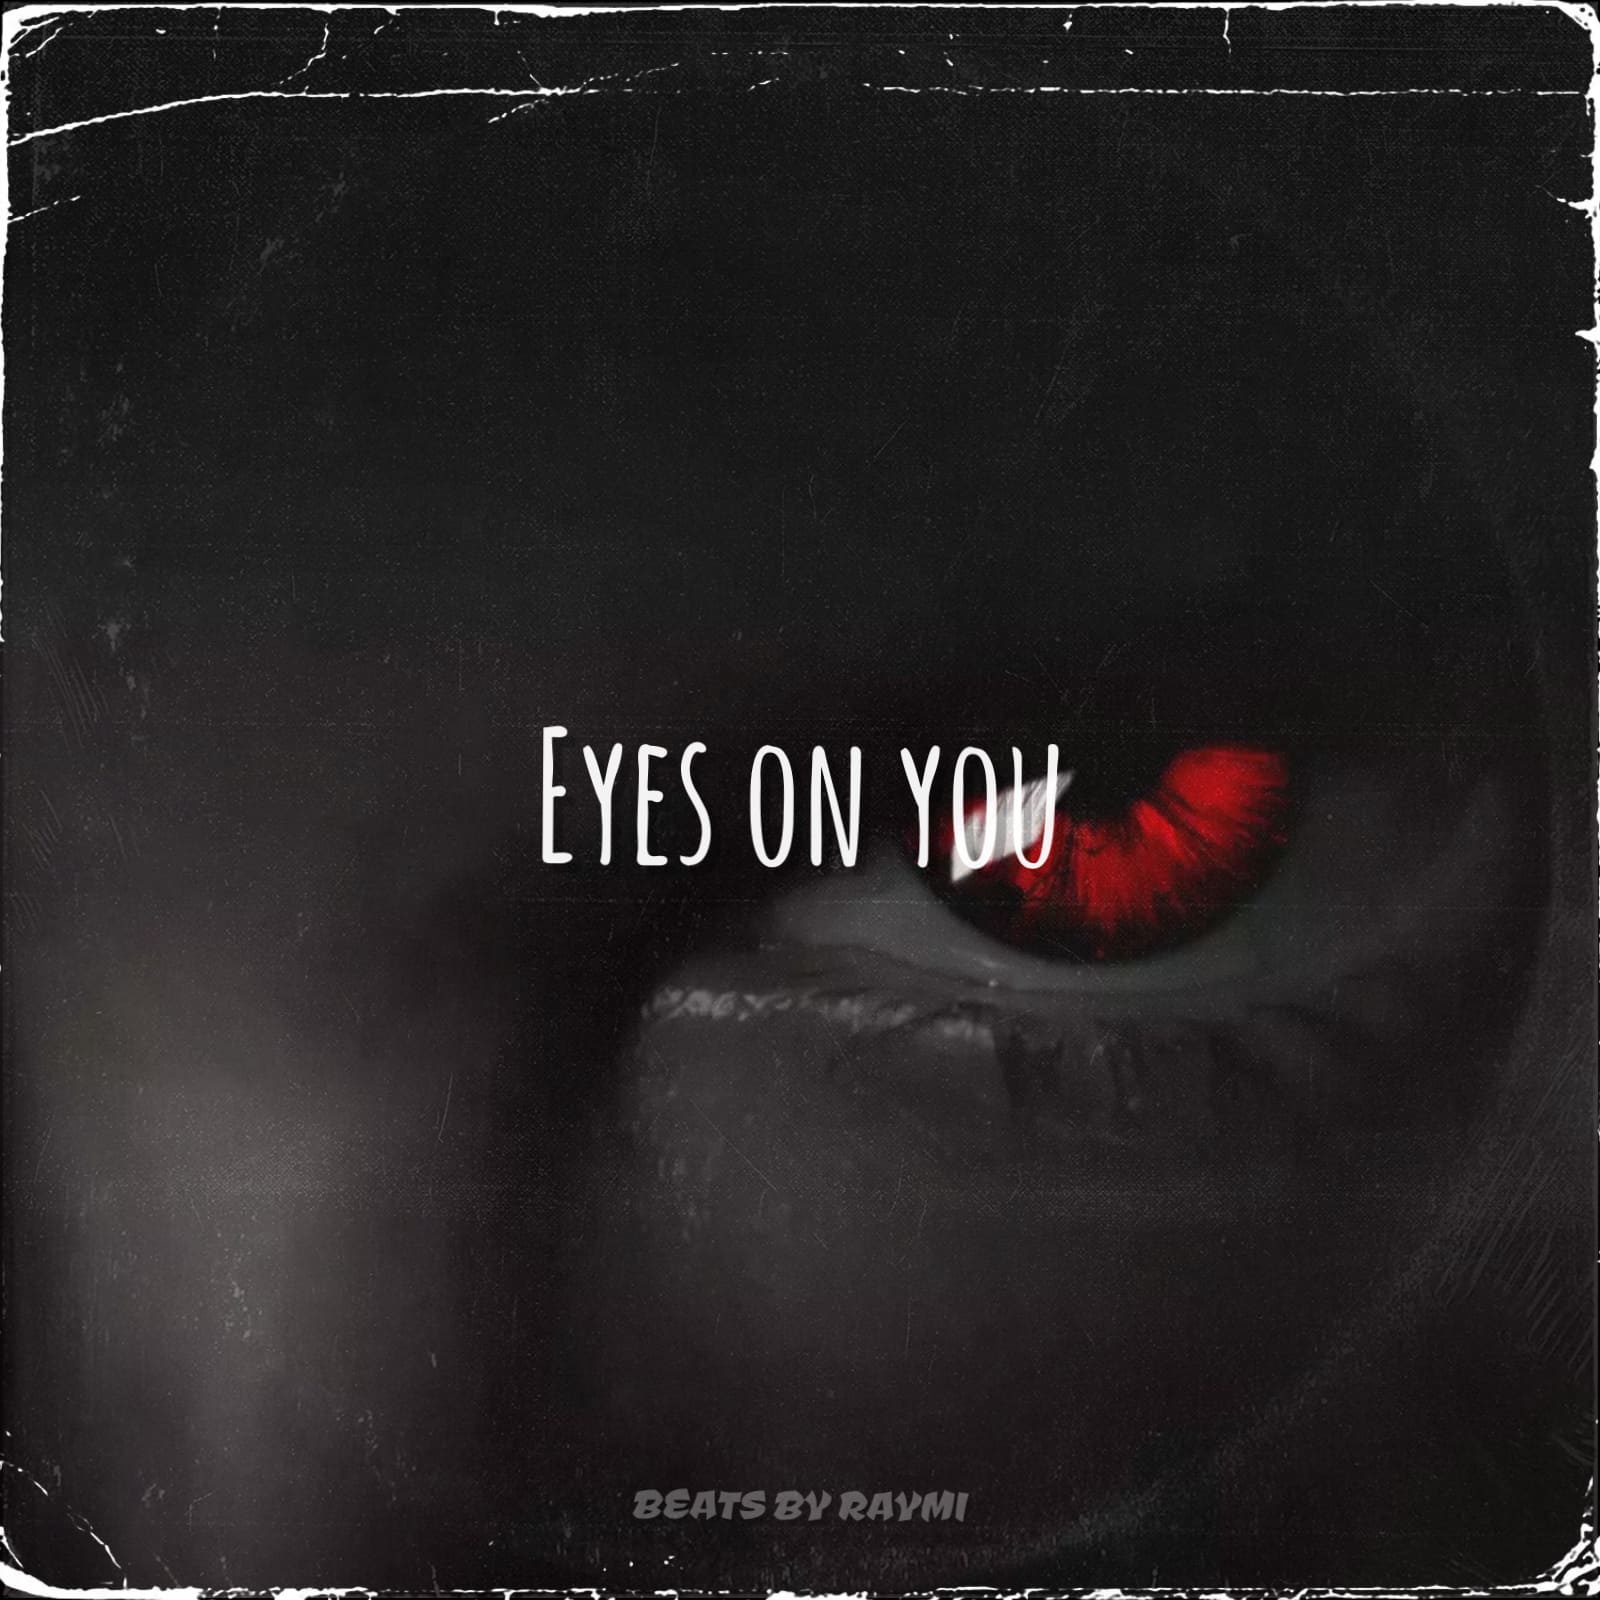 обложка бита, Raymi, музыка, cover, Eyes on you (легкий, приятный бит)